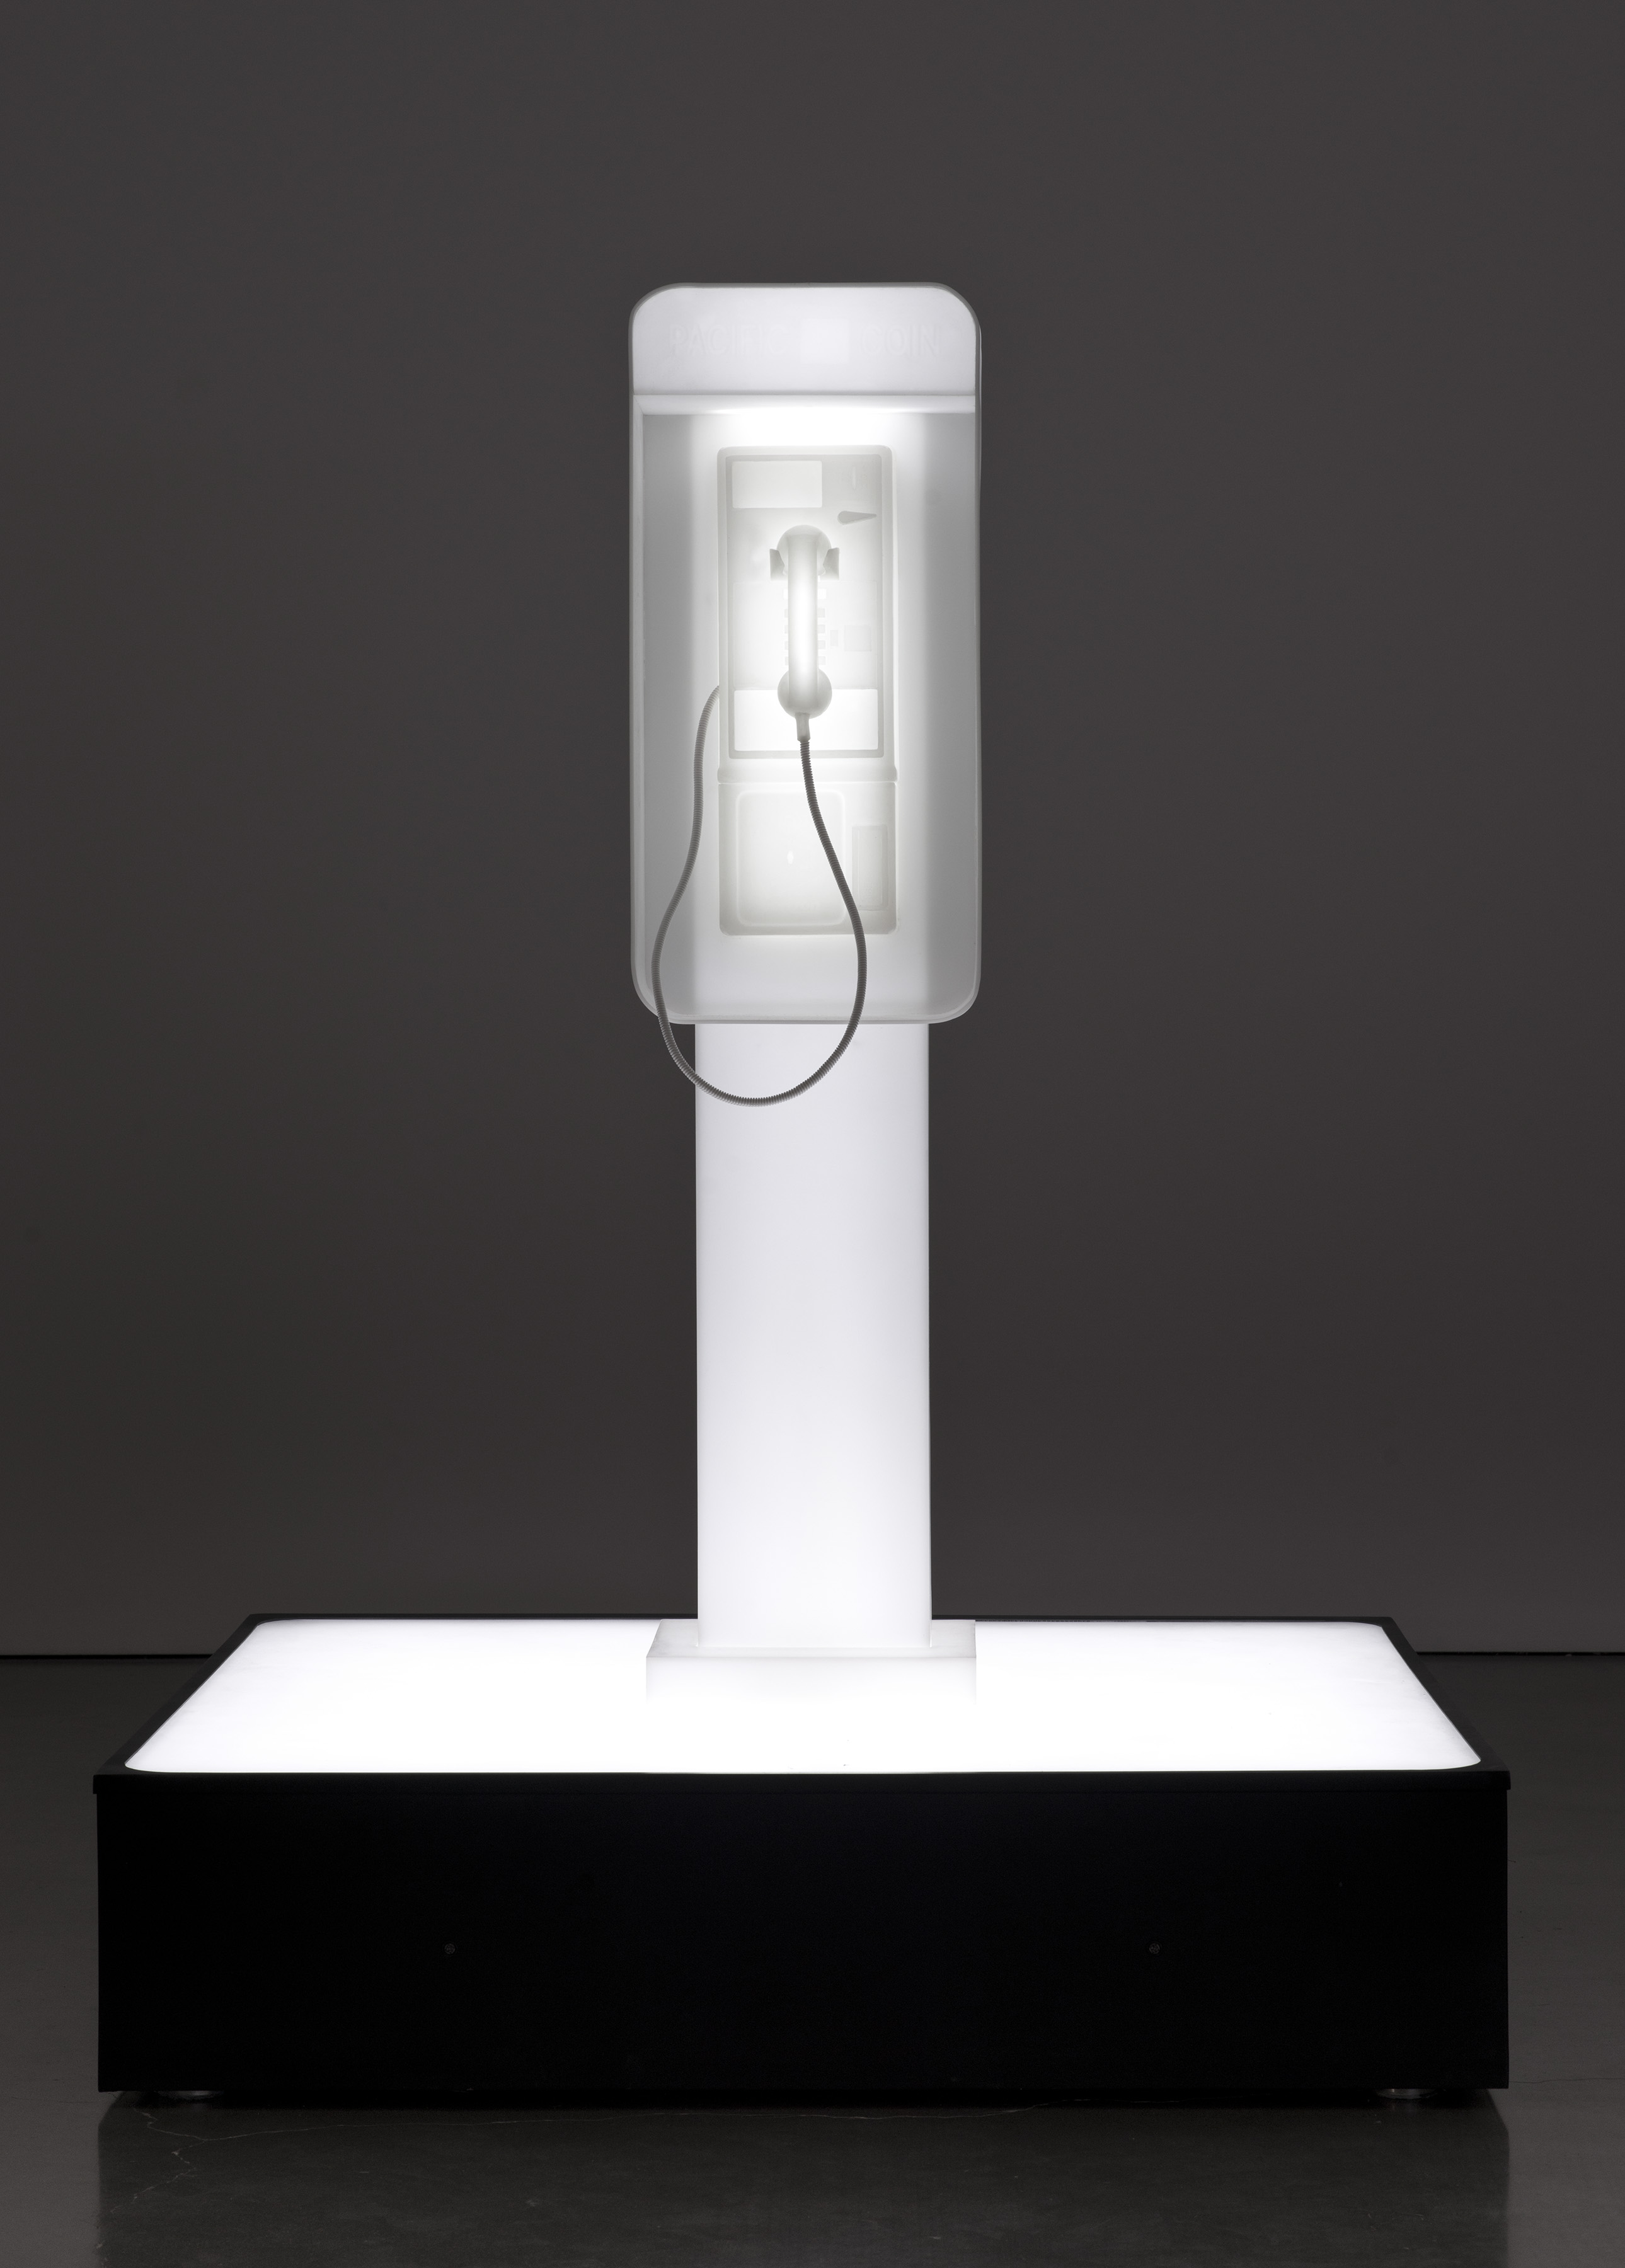 Doug Aitken - twilight, 2014, cast resin, acrylic and responsive / generative LED